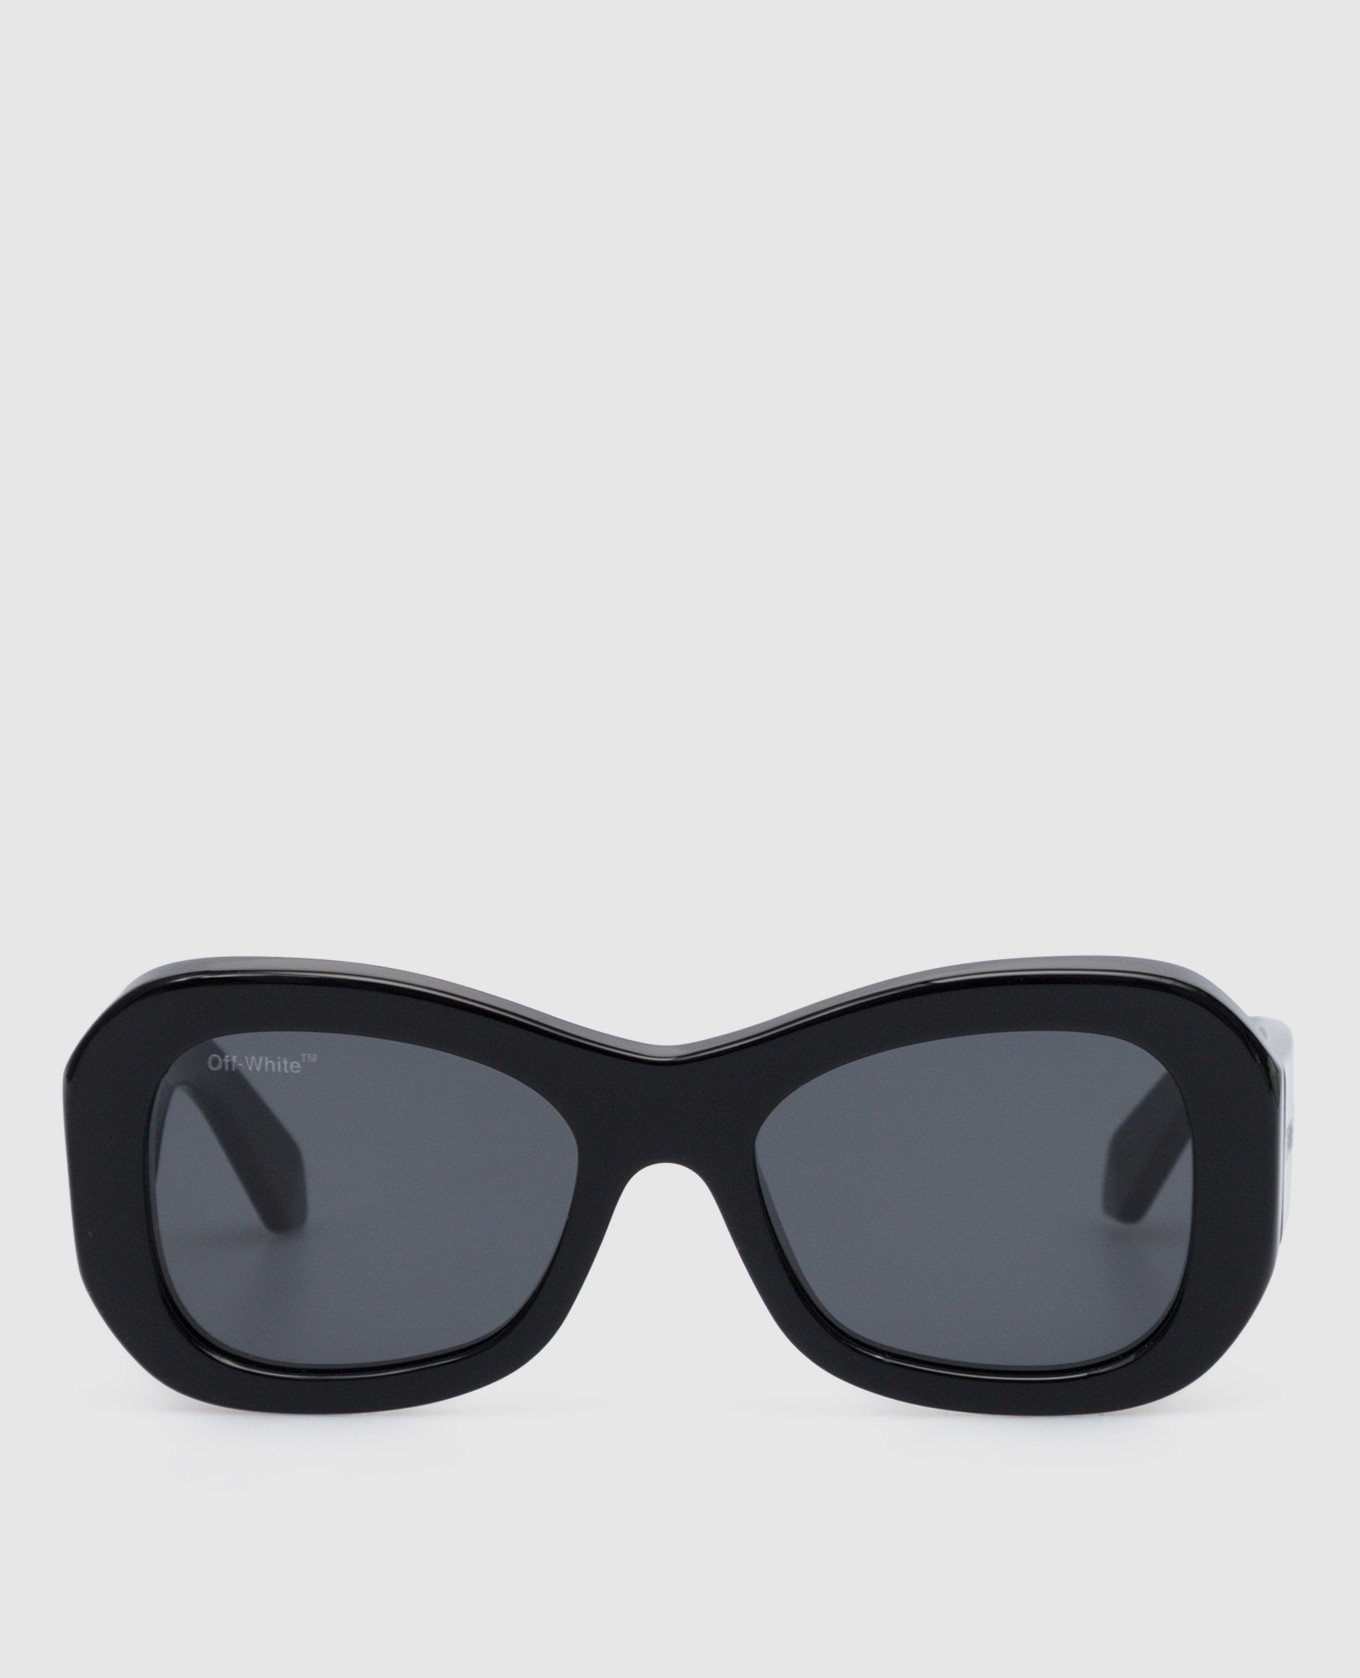 Black Pablo sunglasses with contrasting logo